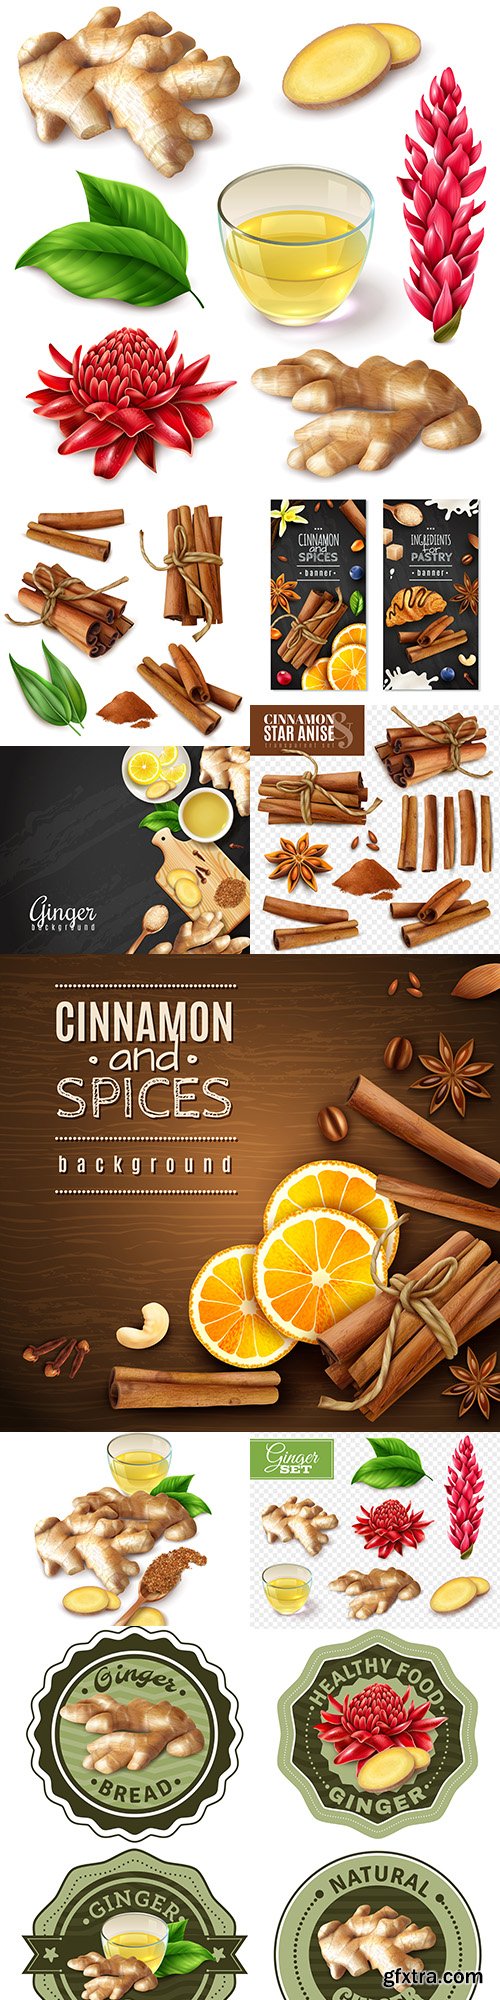 Ginger root and cinnamon sticks 3d illustration